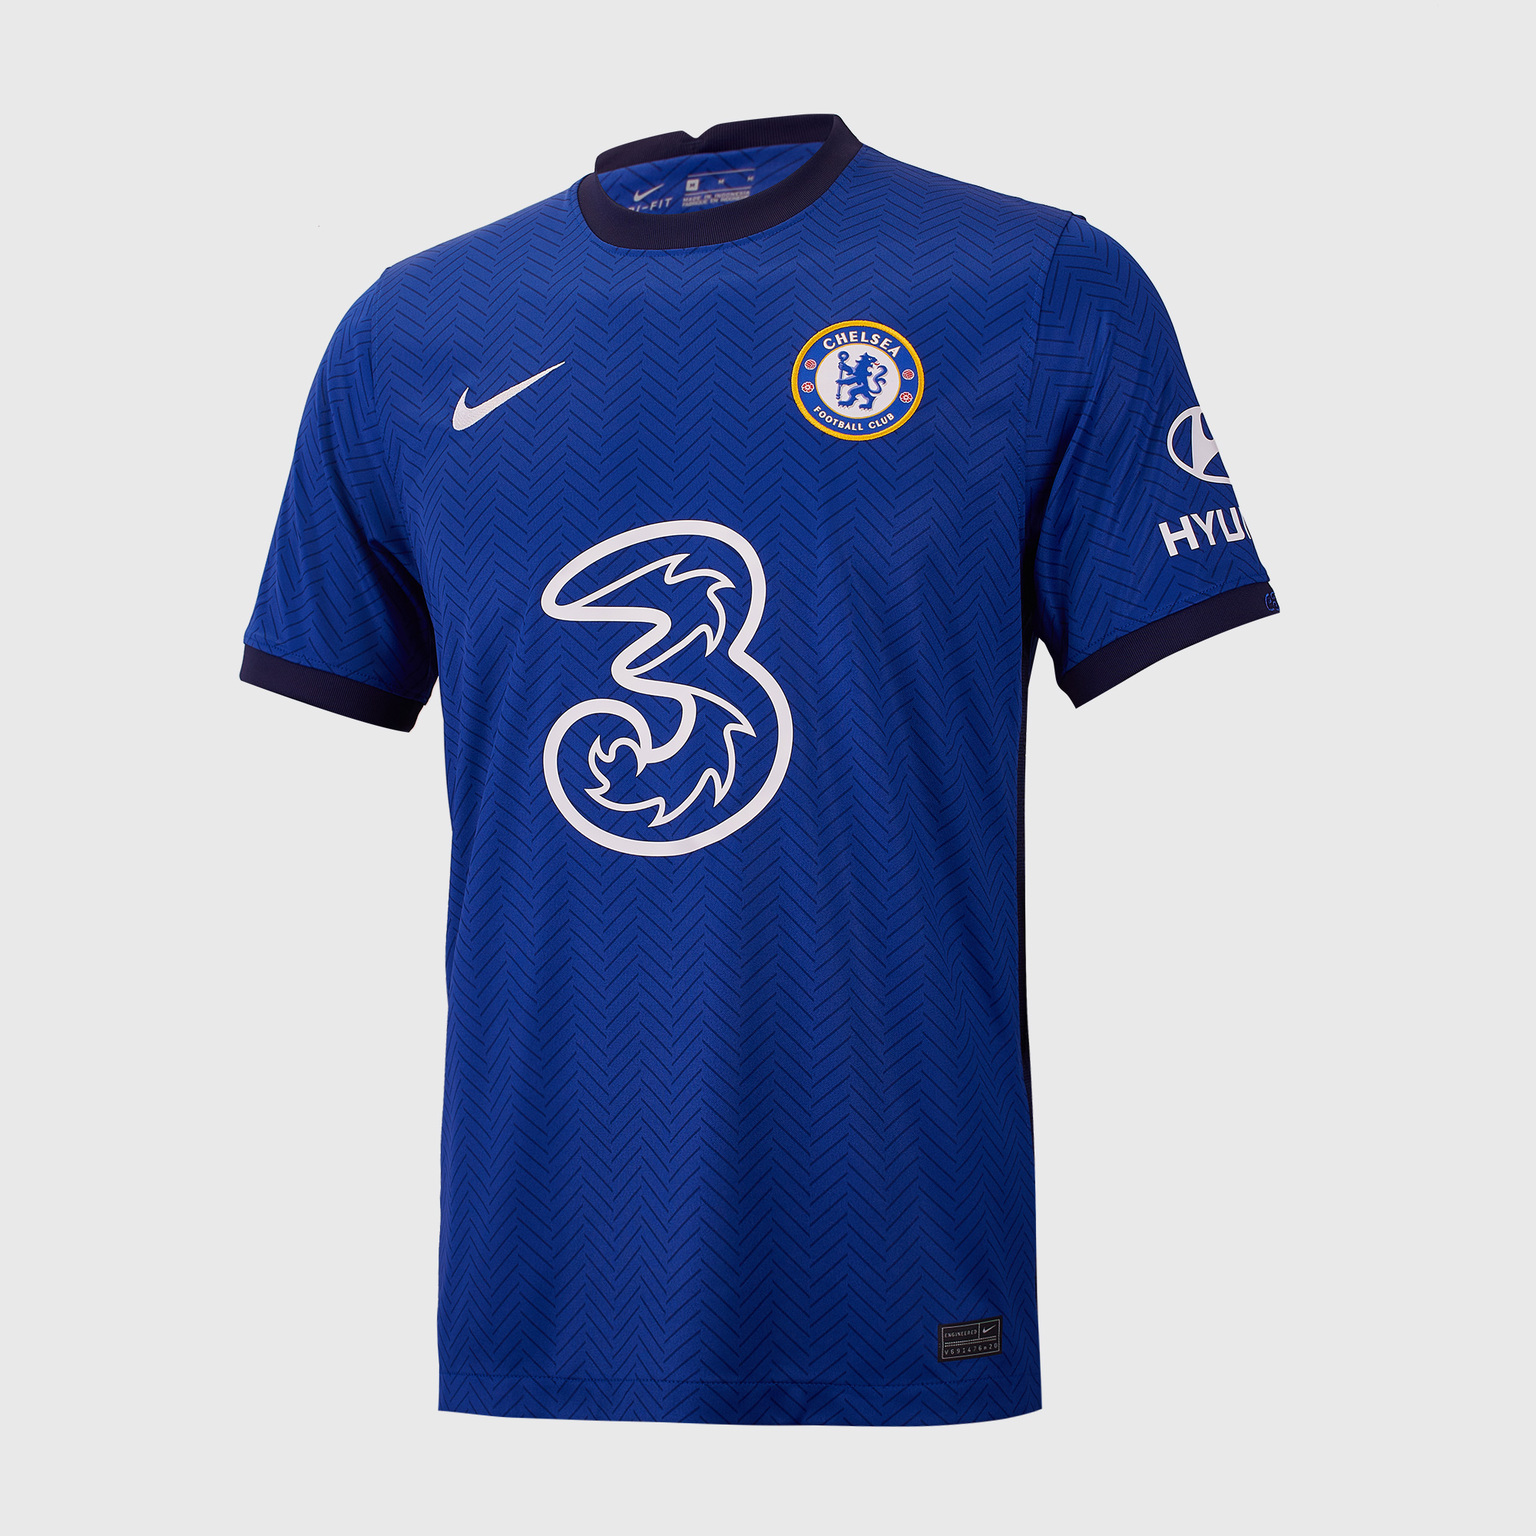 Футболка игровая домашняя Nike Chelsea сезон 2020/21